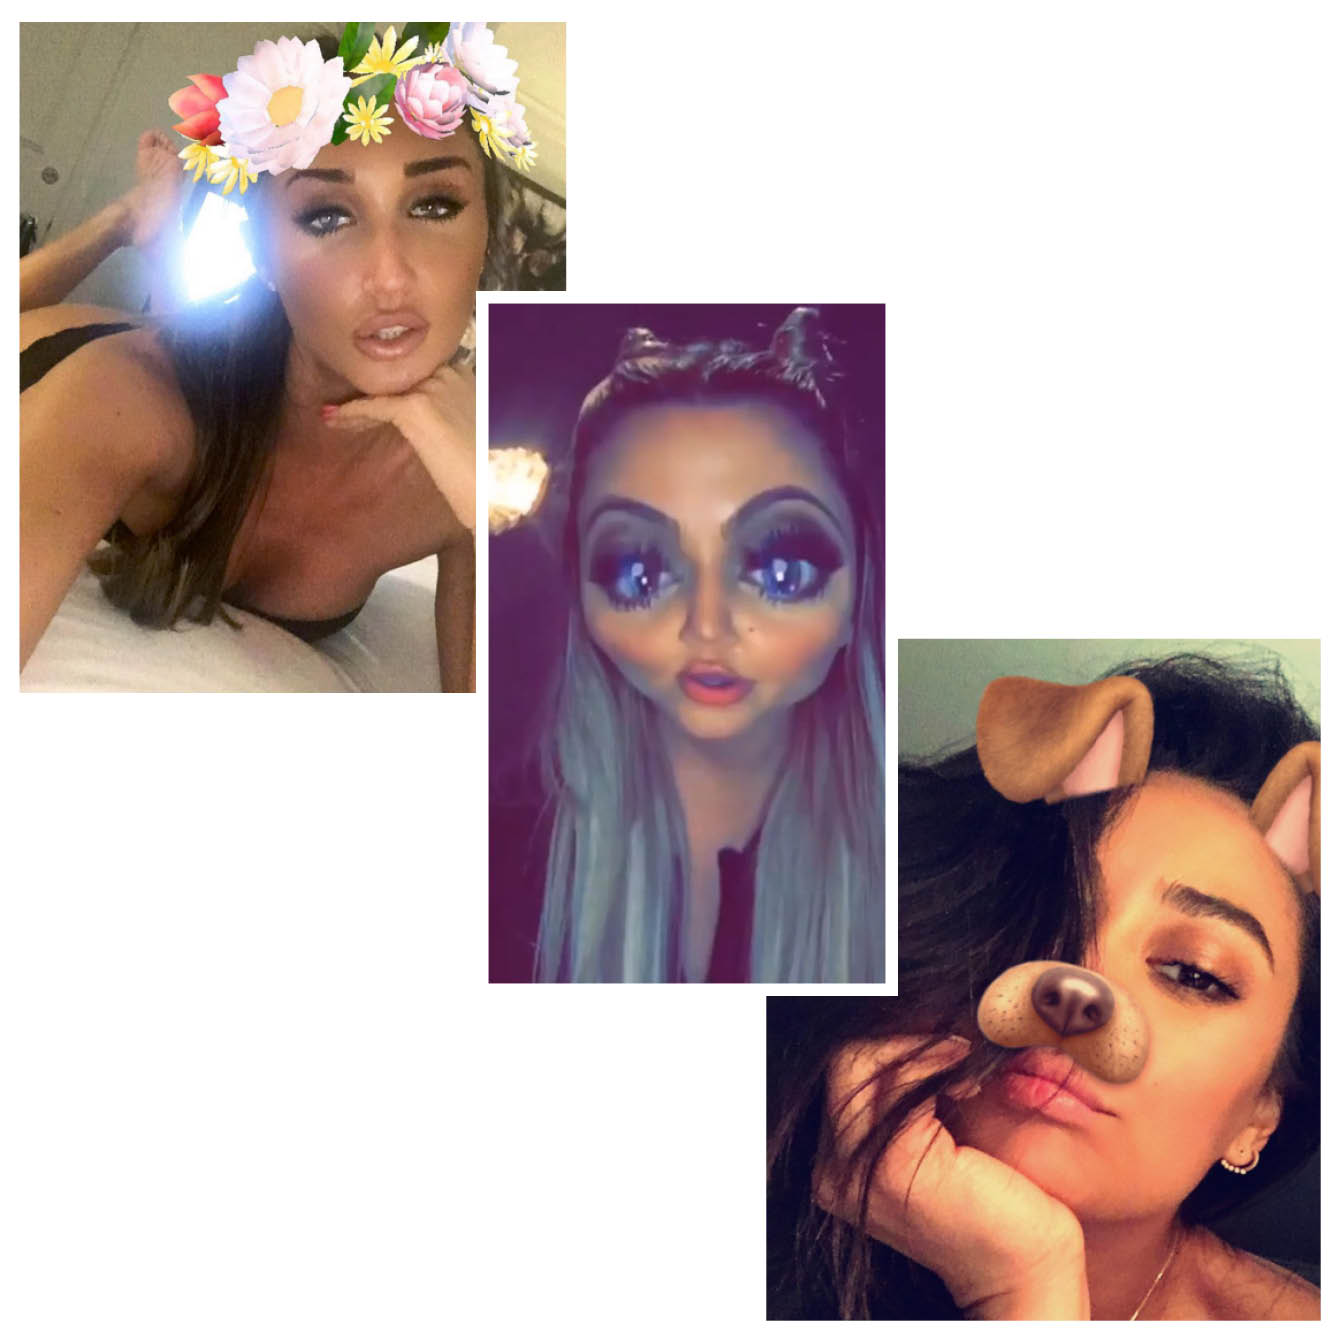 Snapchat filters